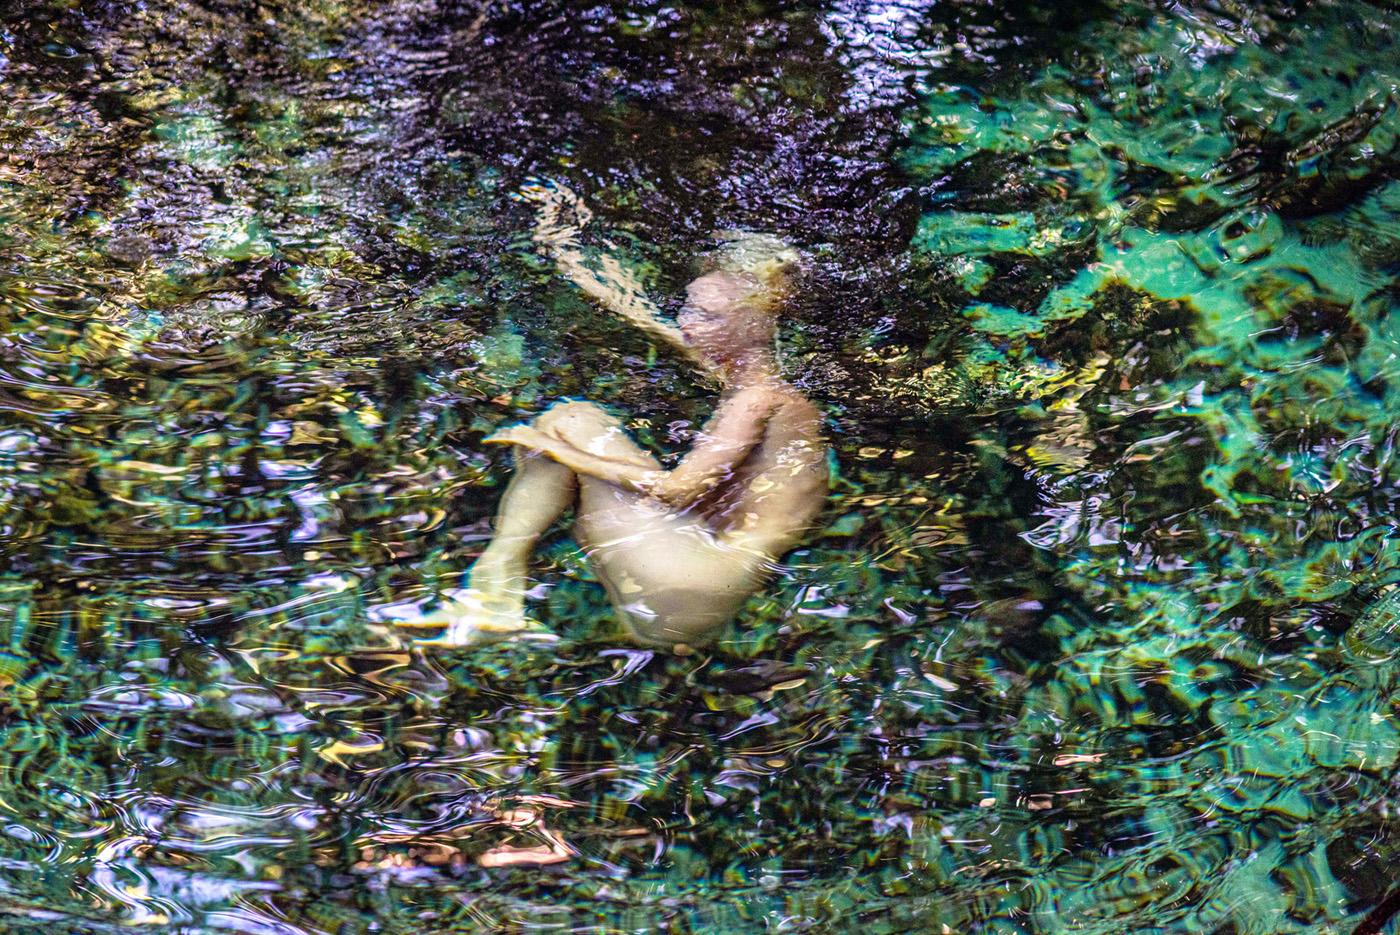 John Mazlish Nude Photograph - "Rebirth"- Colorful Nude in Water Photo